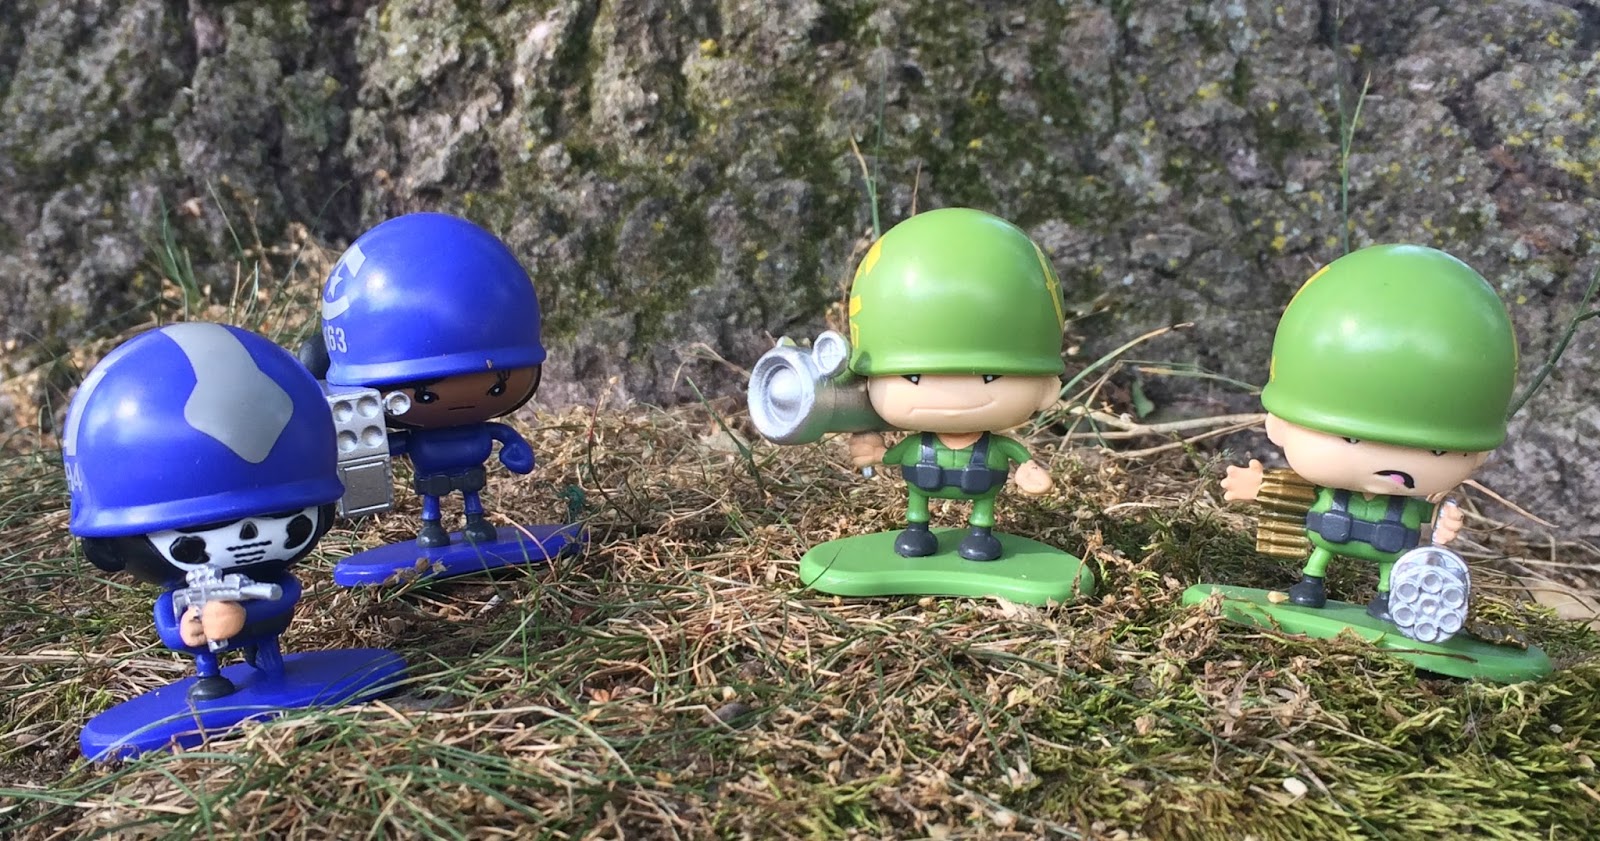 Набор игровых фигурок - Awesome Little Green Men, 4 штуки  